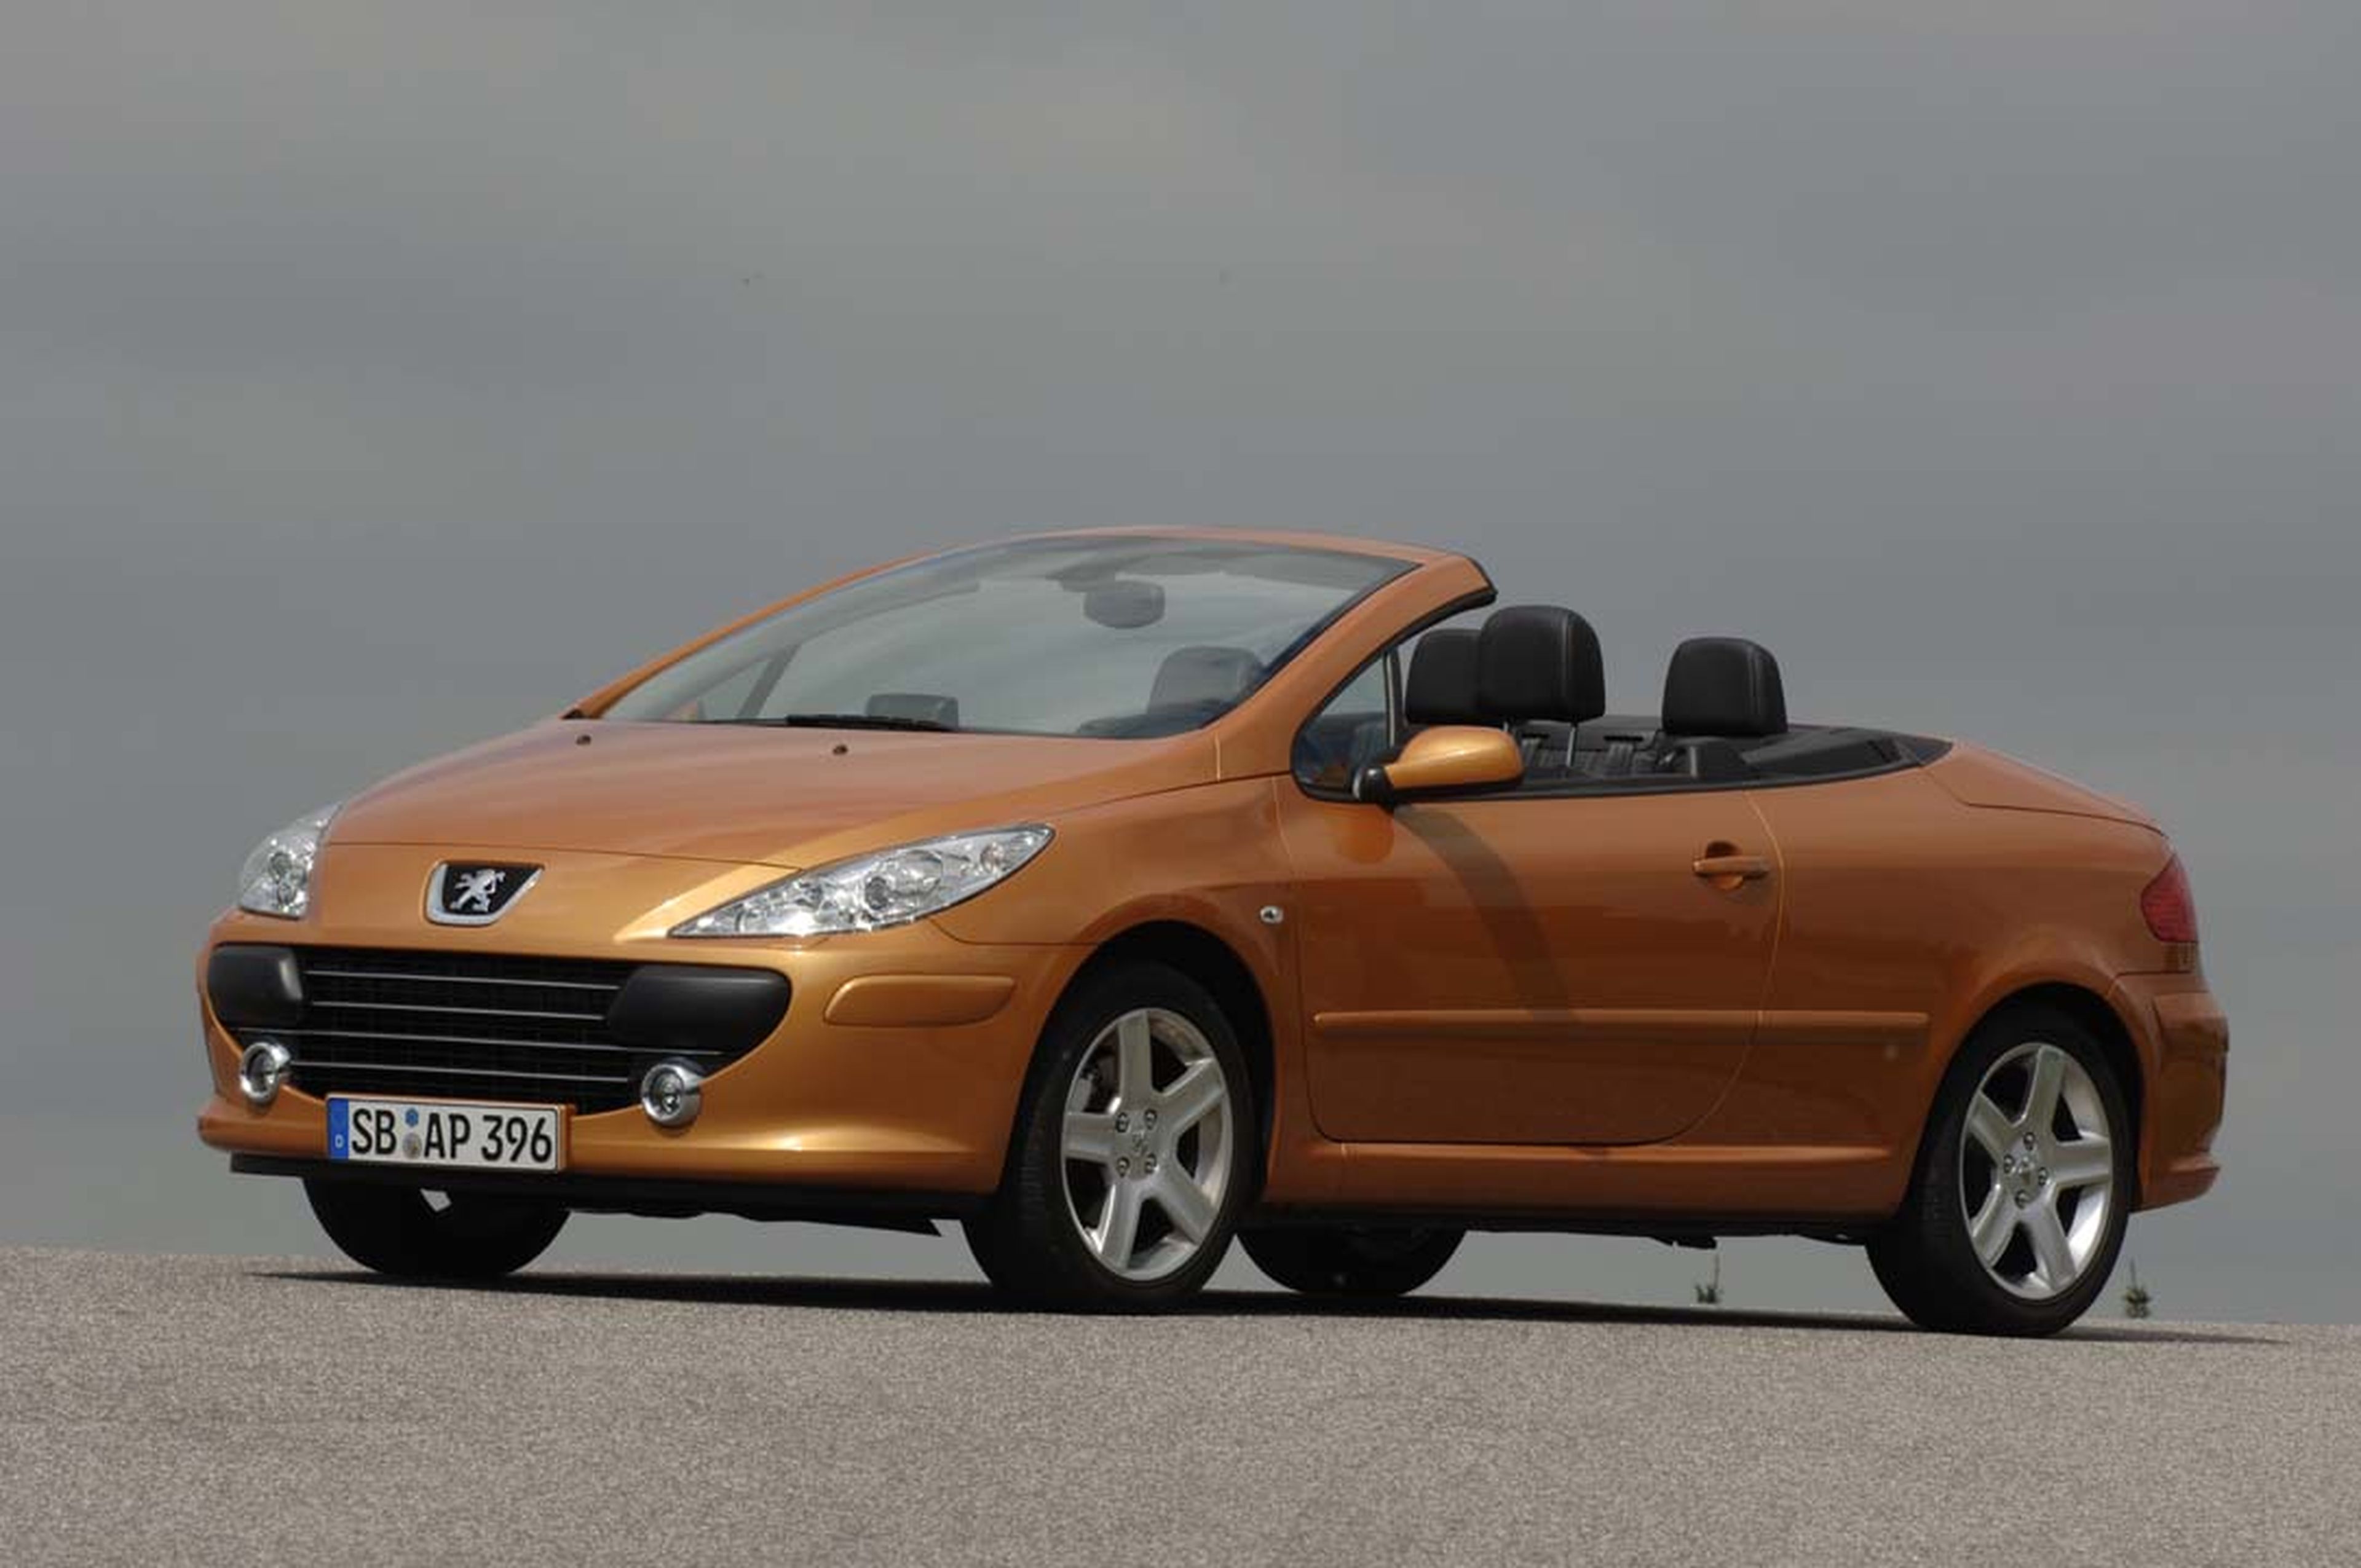 Segunda mano: ¿Peugeot 307 o Seat León?